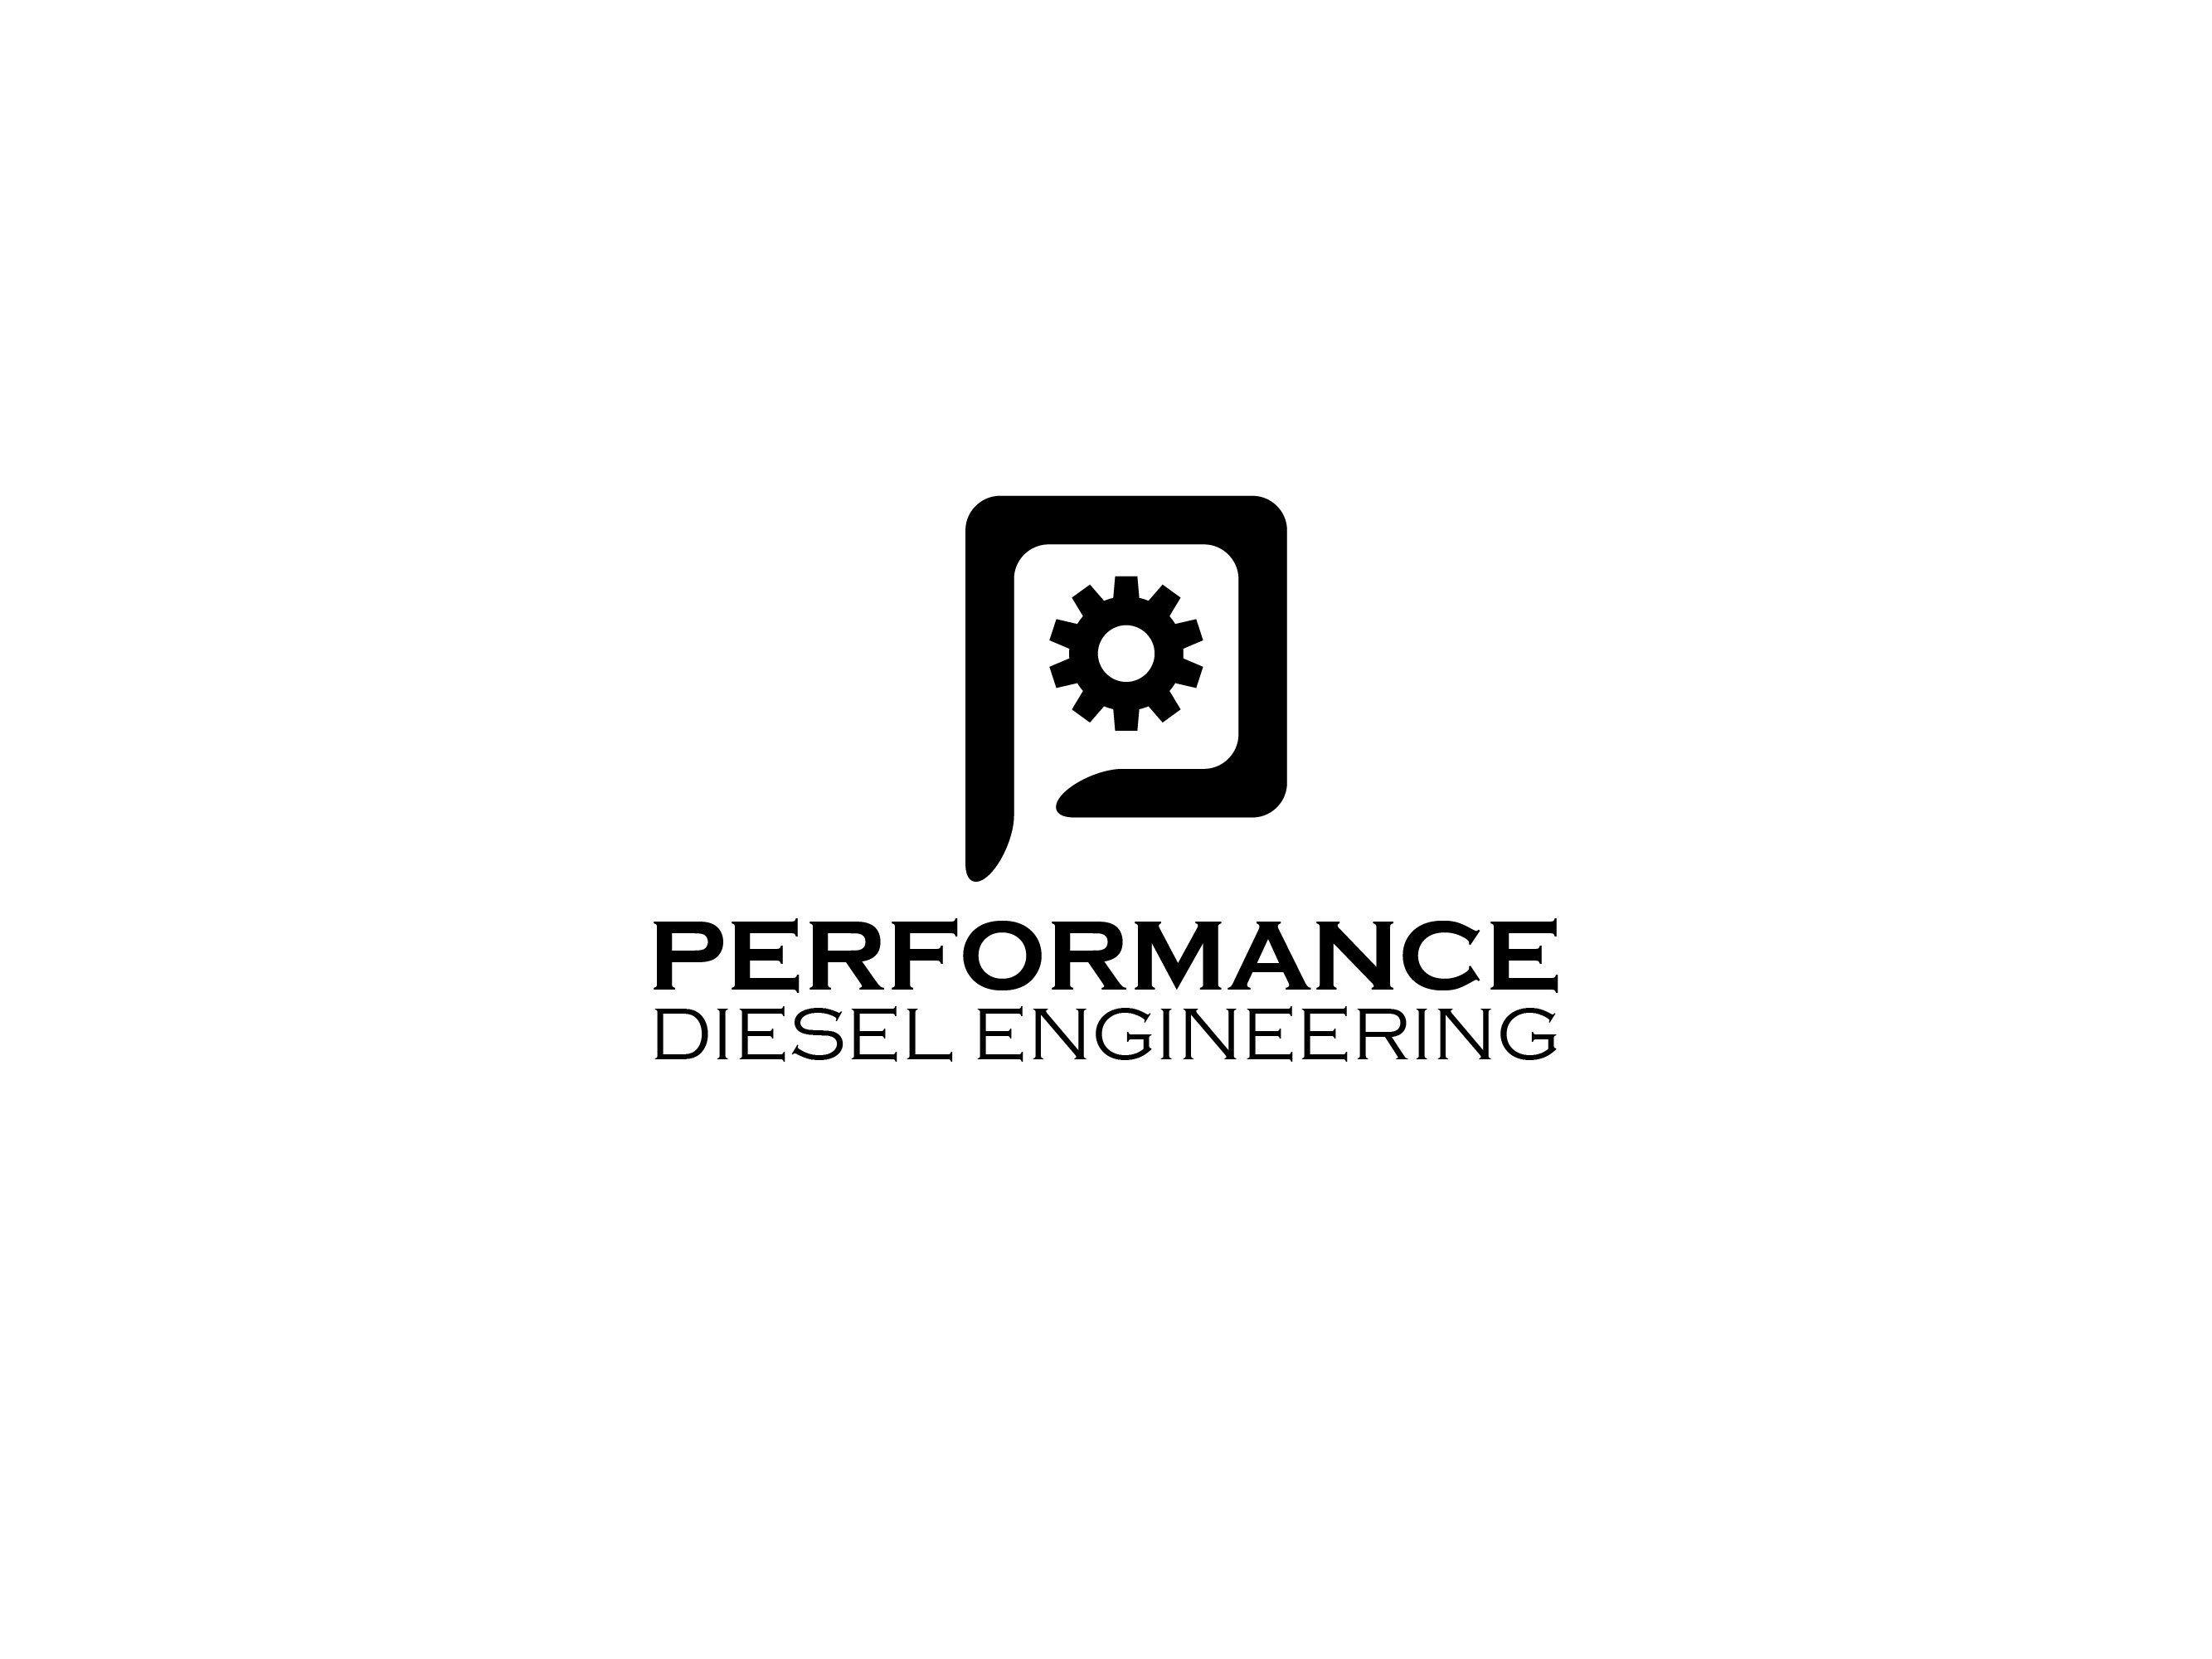 Performance Company Logo - Performance Diesel Engineering logo, diesel diagnostics and repair ...